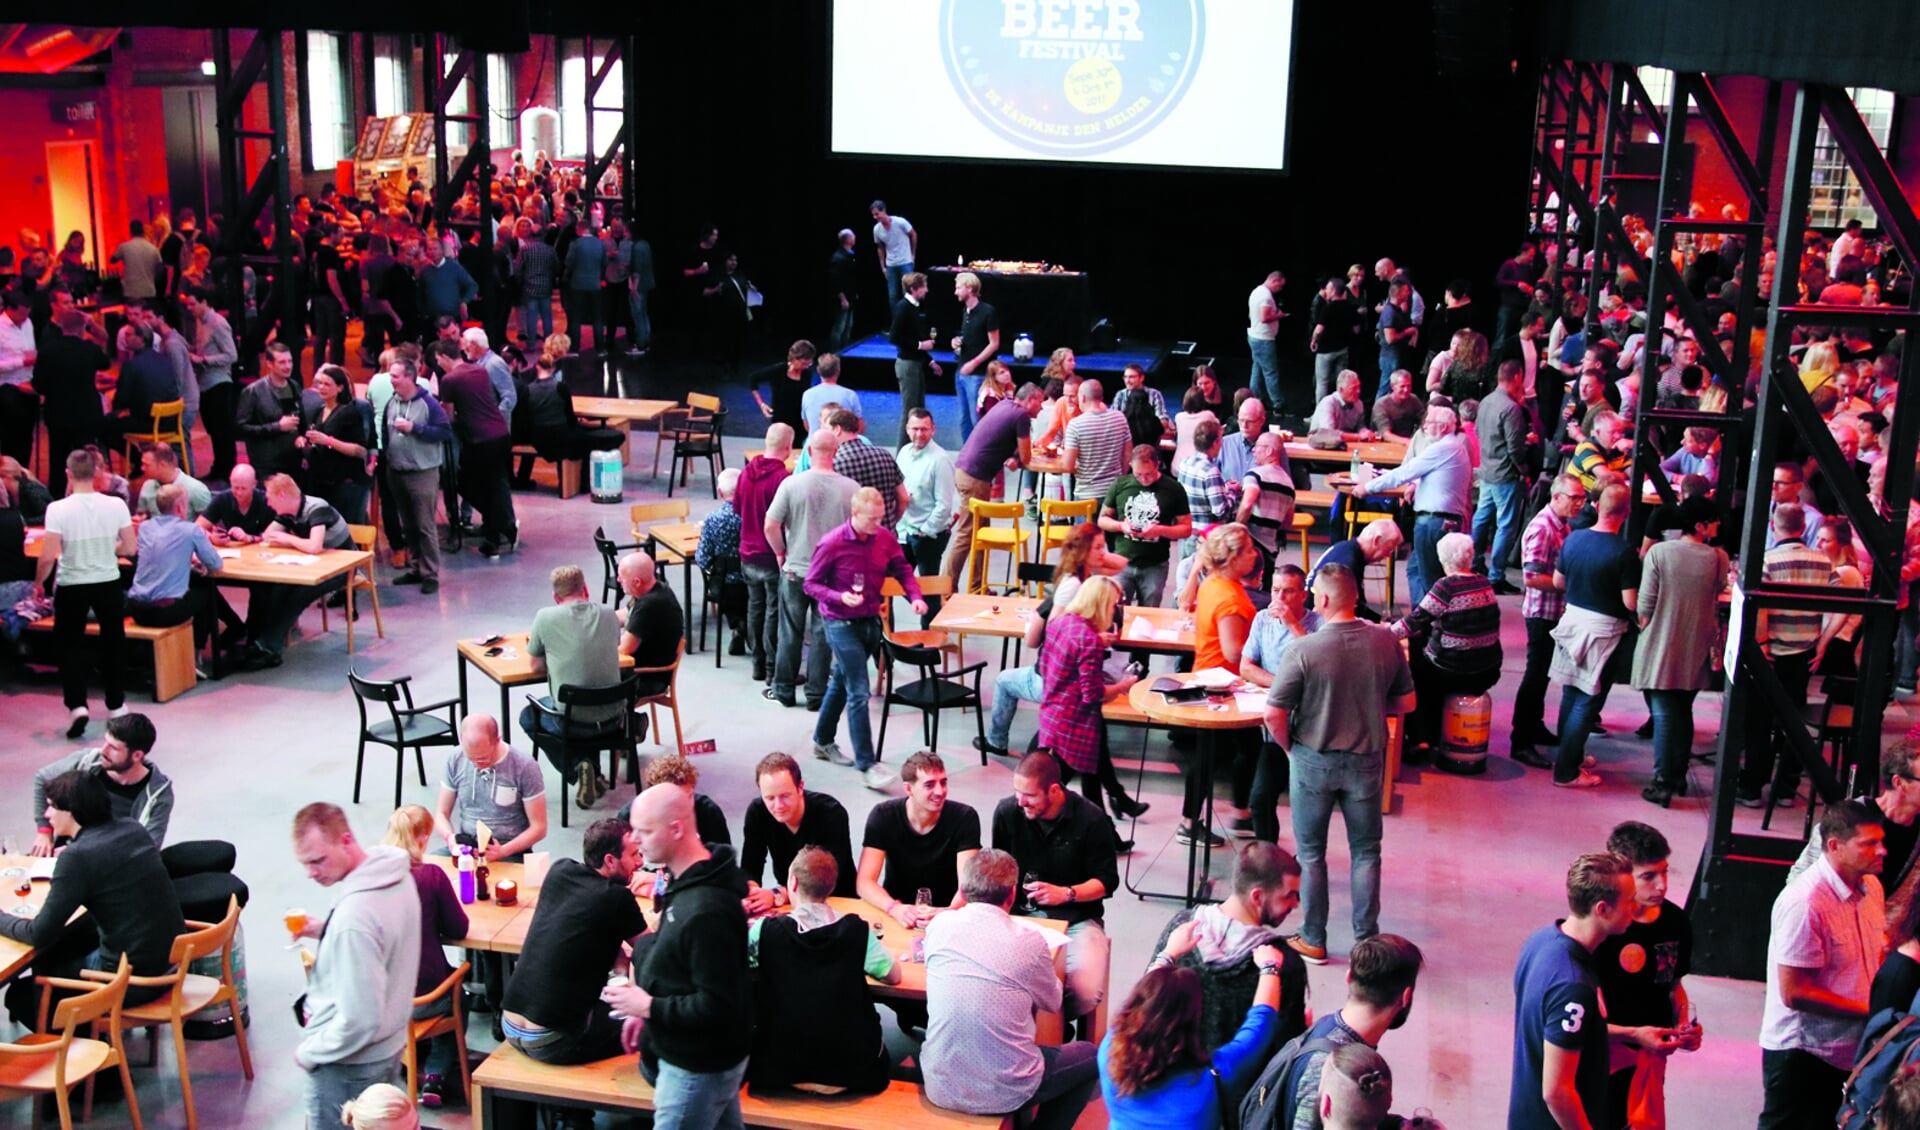 Het KeyKeg International Beer Festival gaat op herhaling in Theater De Kampanje. (Foto: Stephan Vlaming)